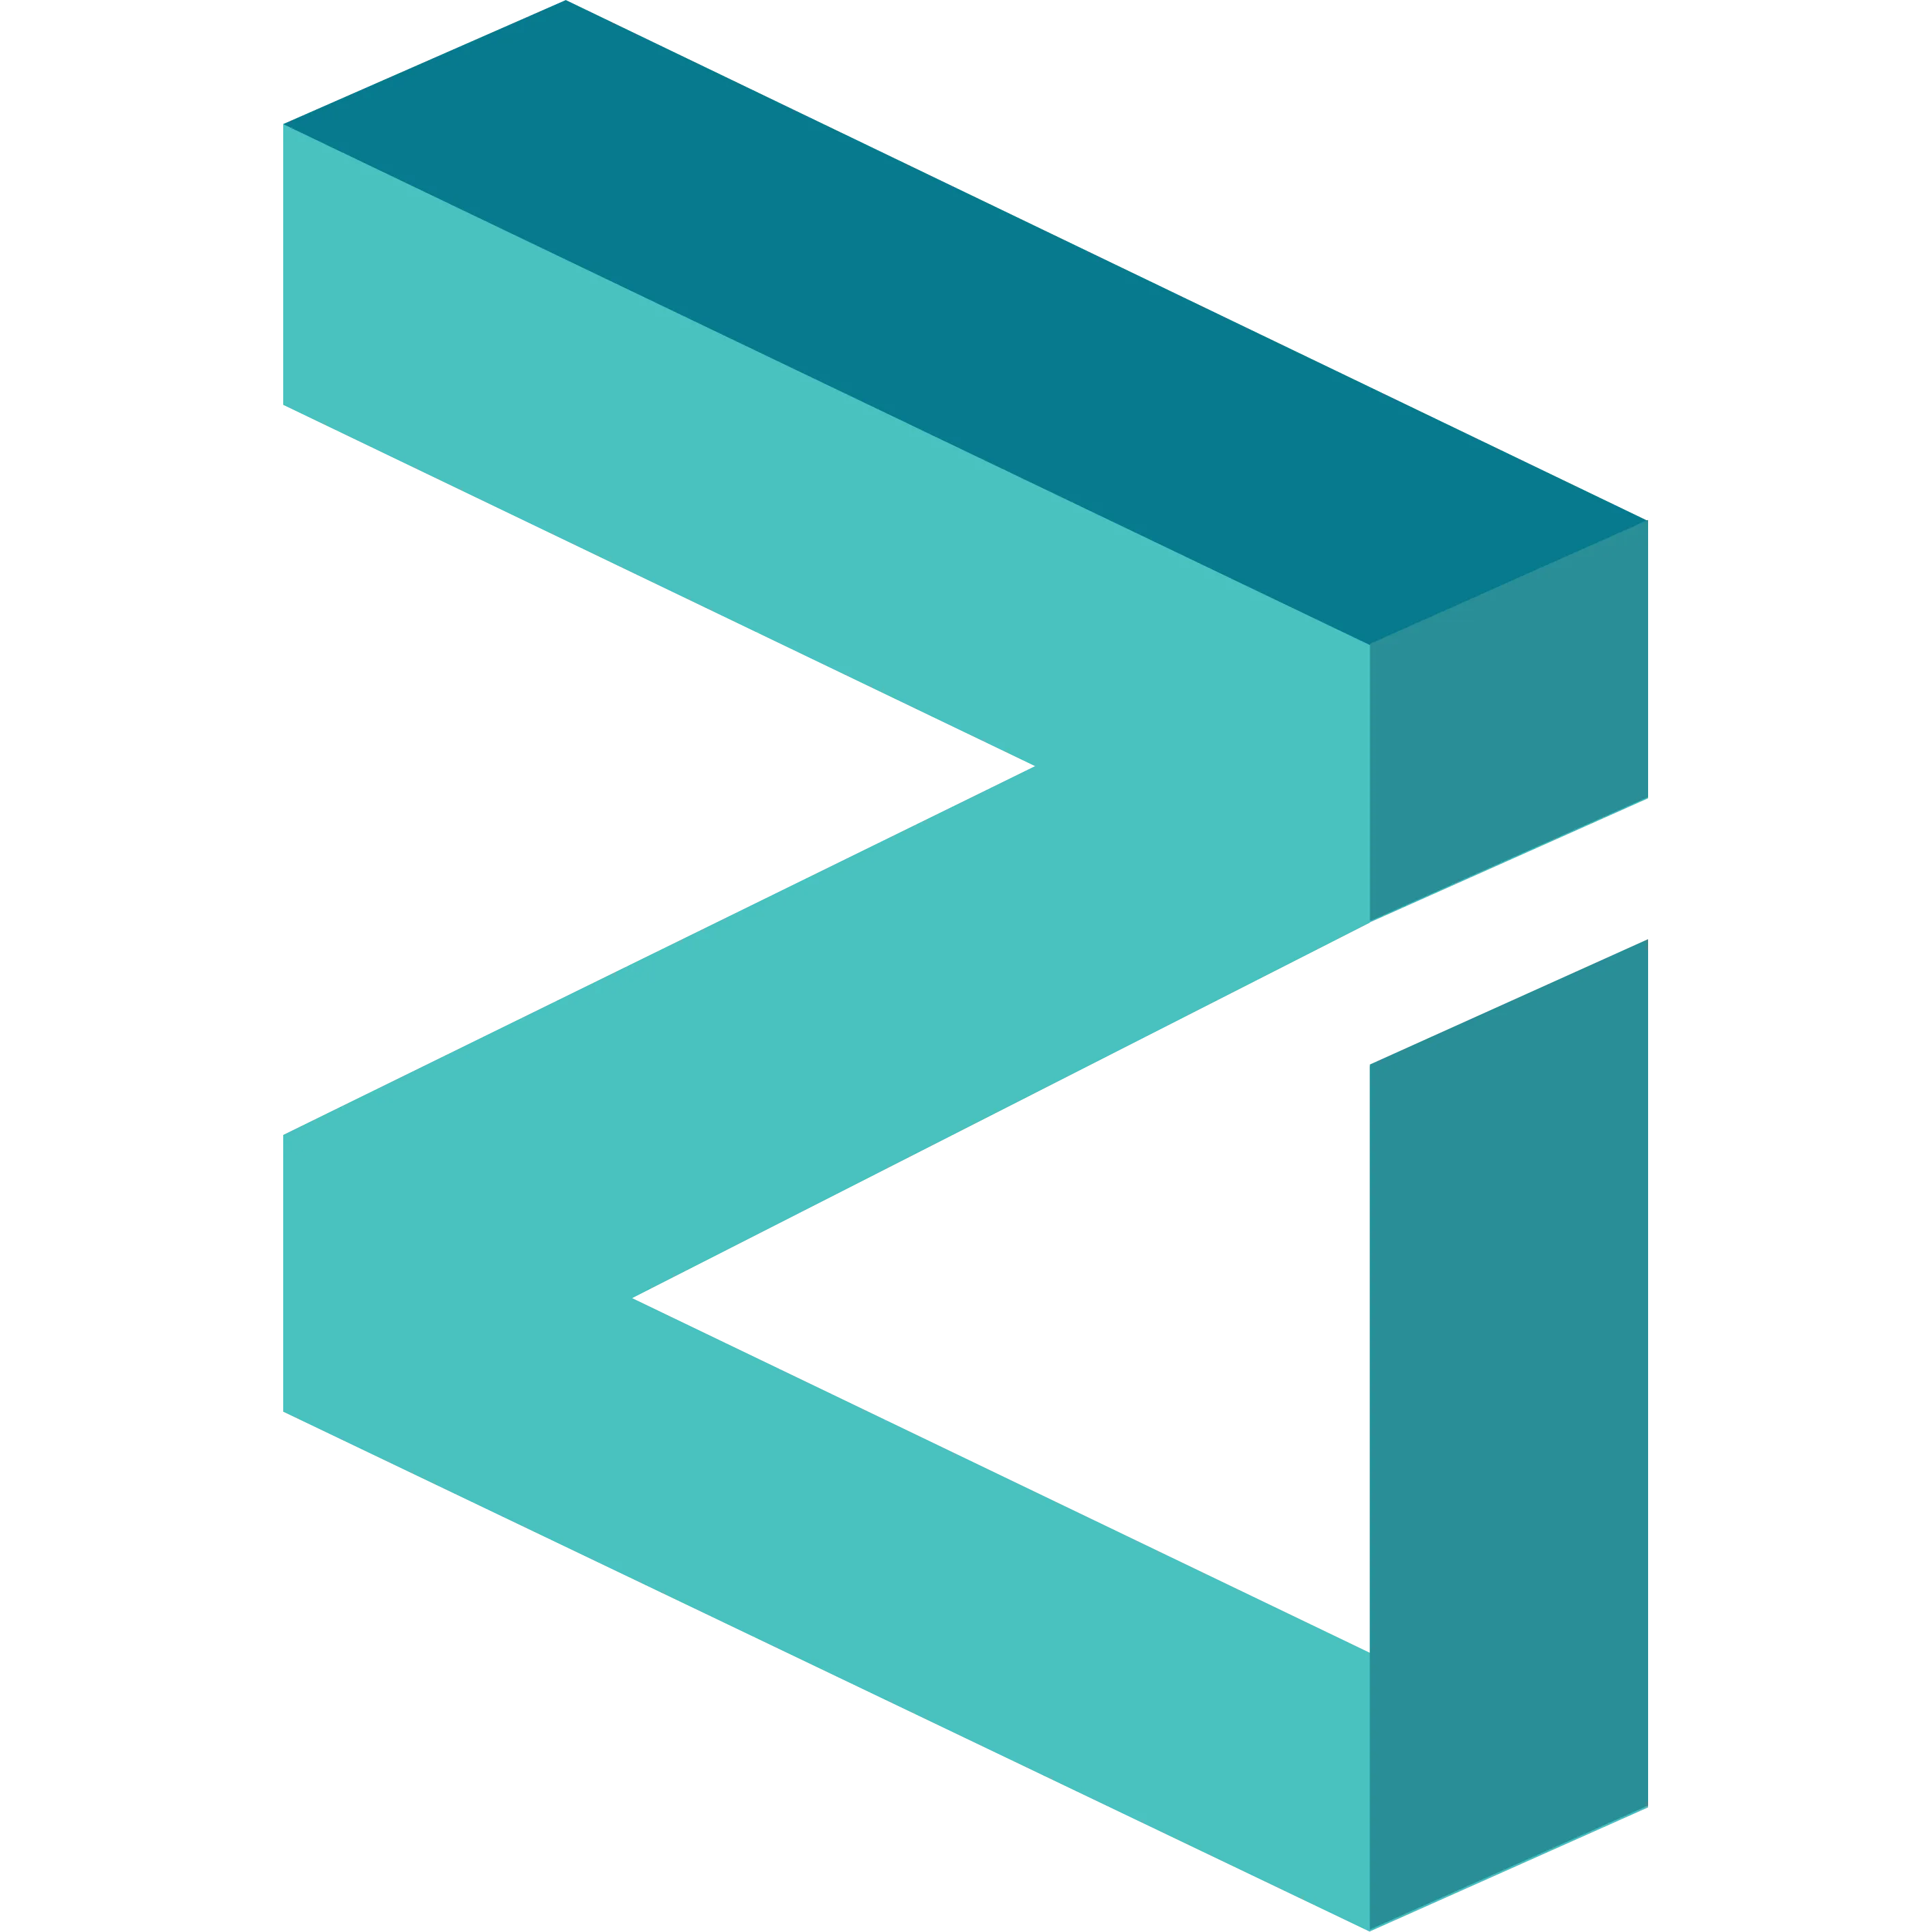 Zilliqa logo in png format